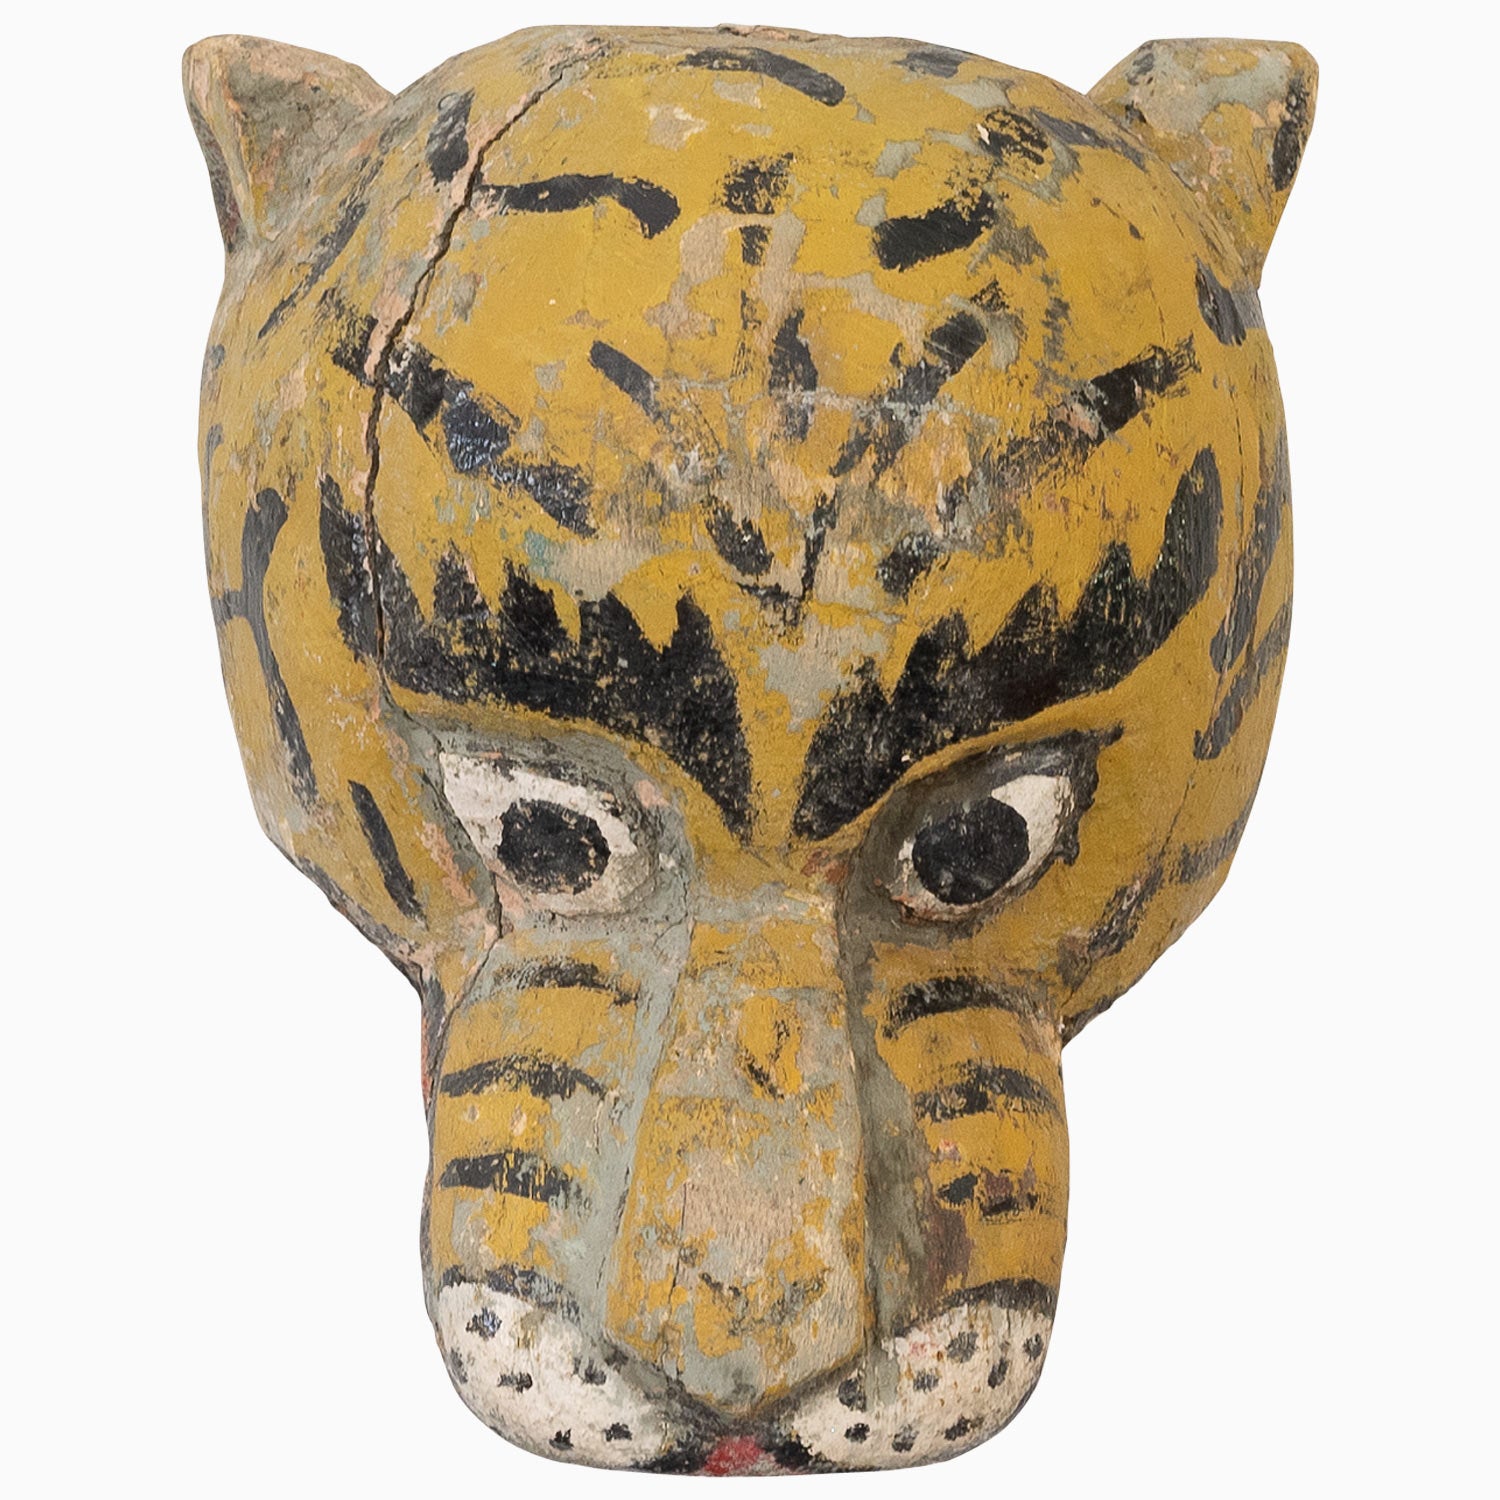 Big Nose Tiger Mask Main